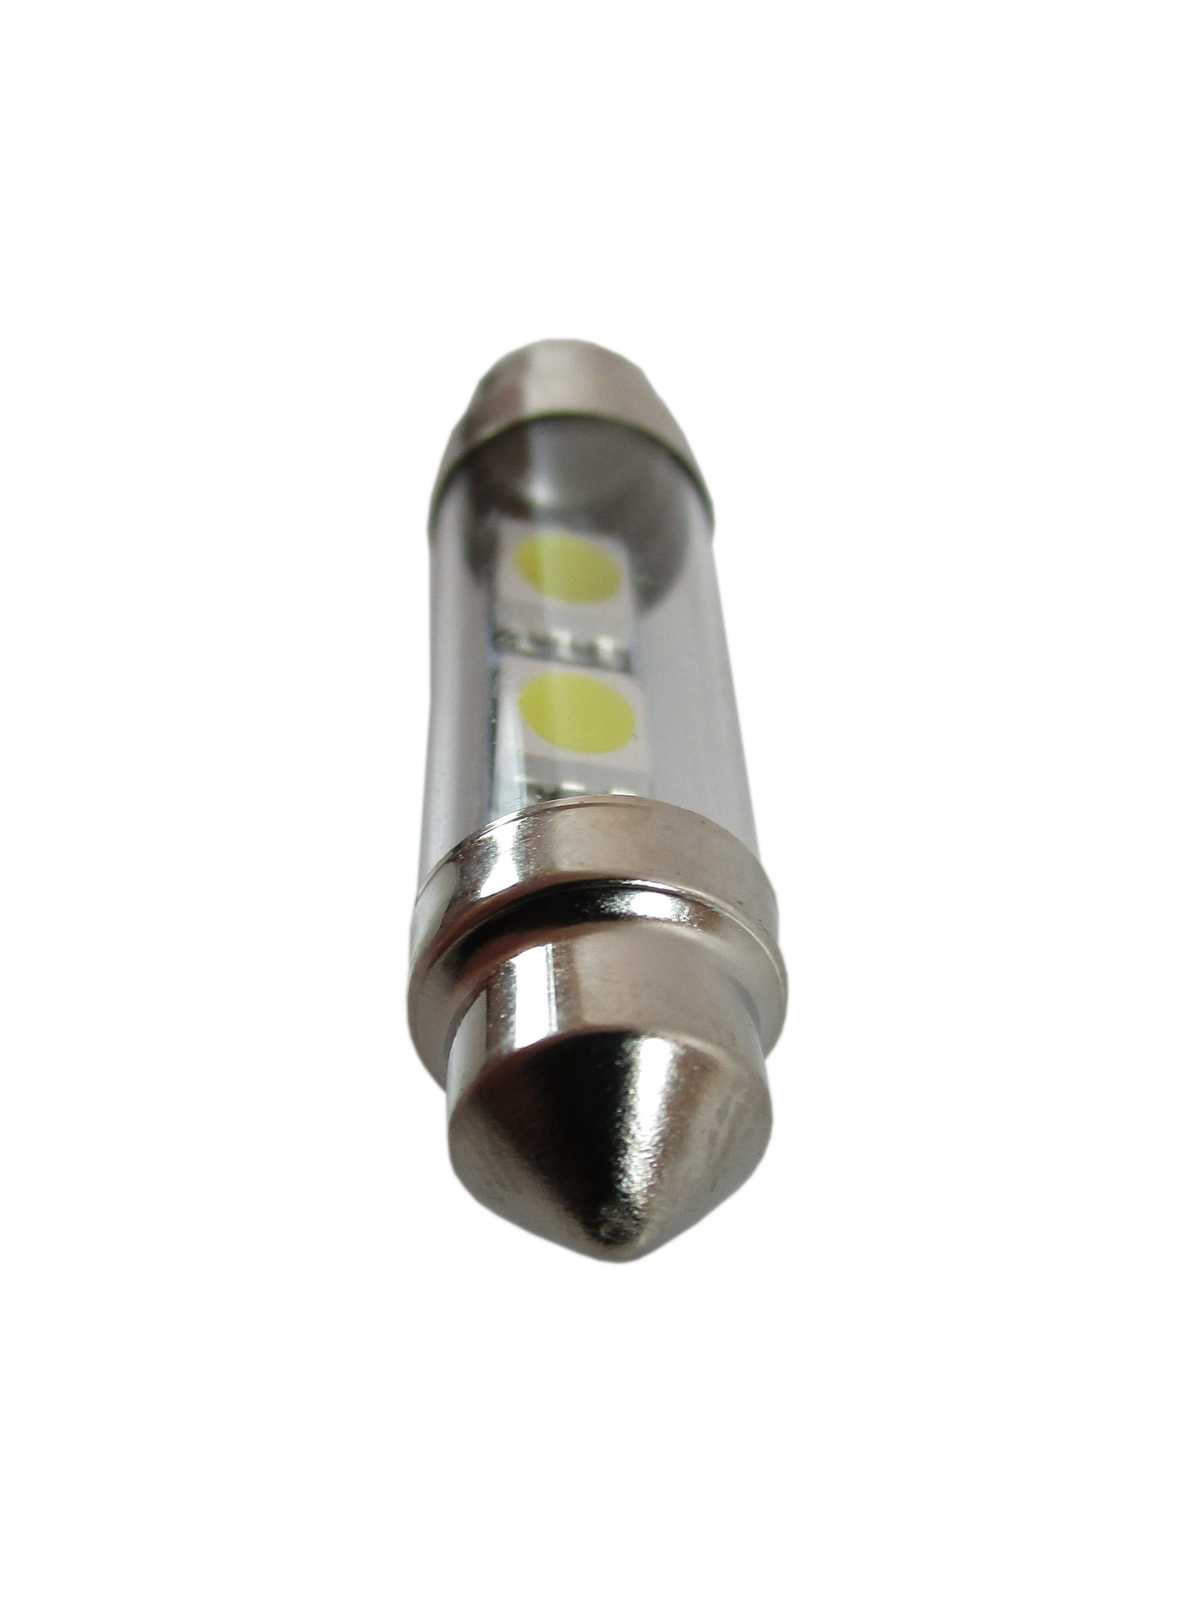 42mm 3 LED Festoon Replacement Bulb